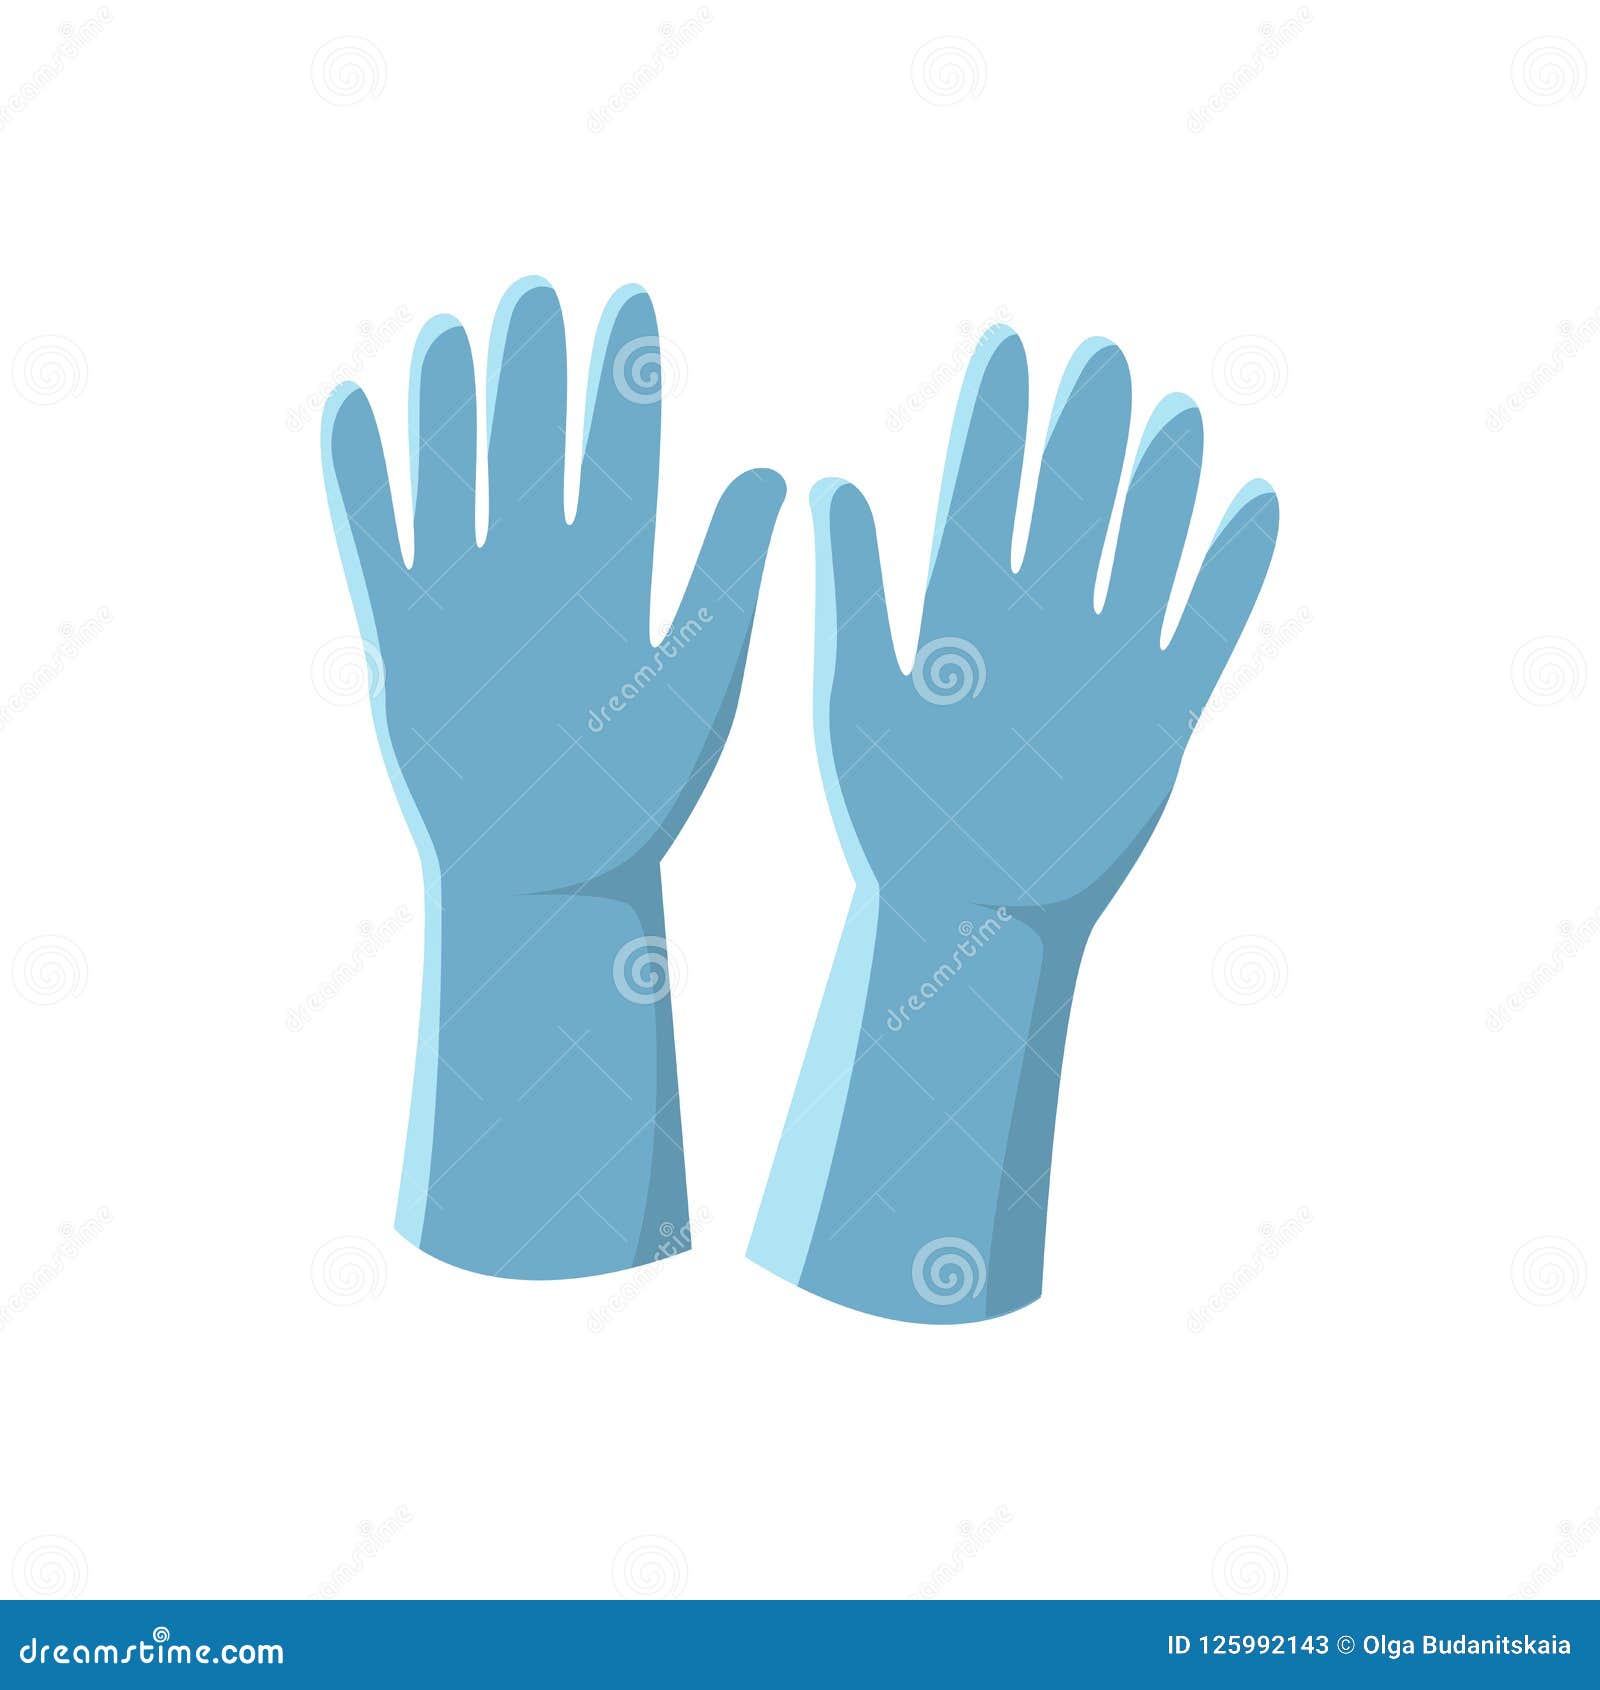 blue latex gloves    on white background.